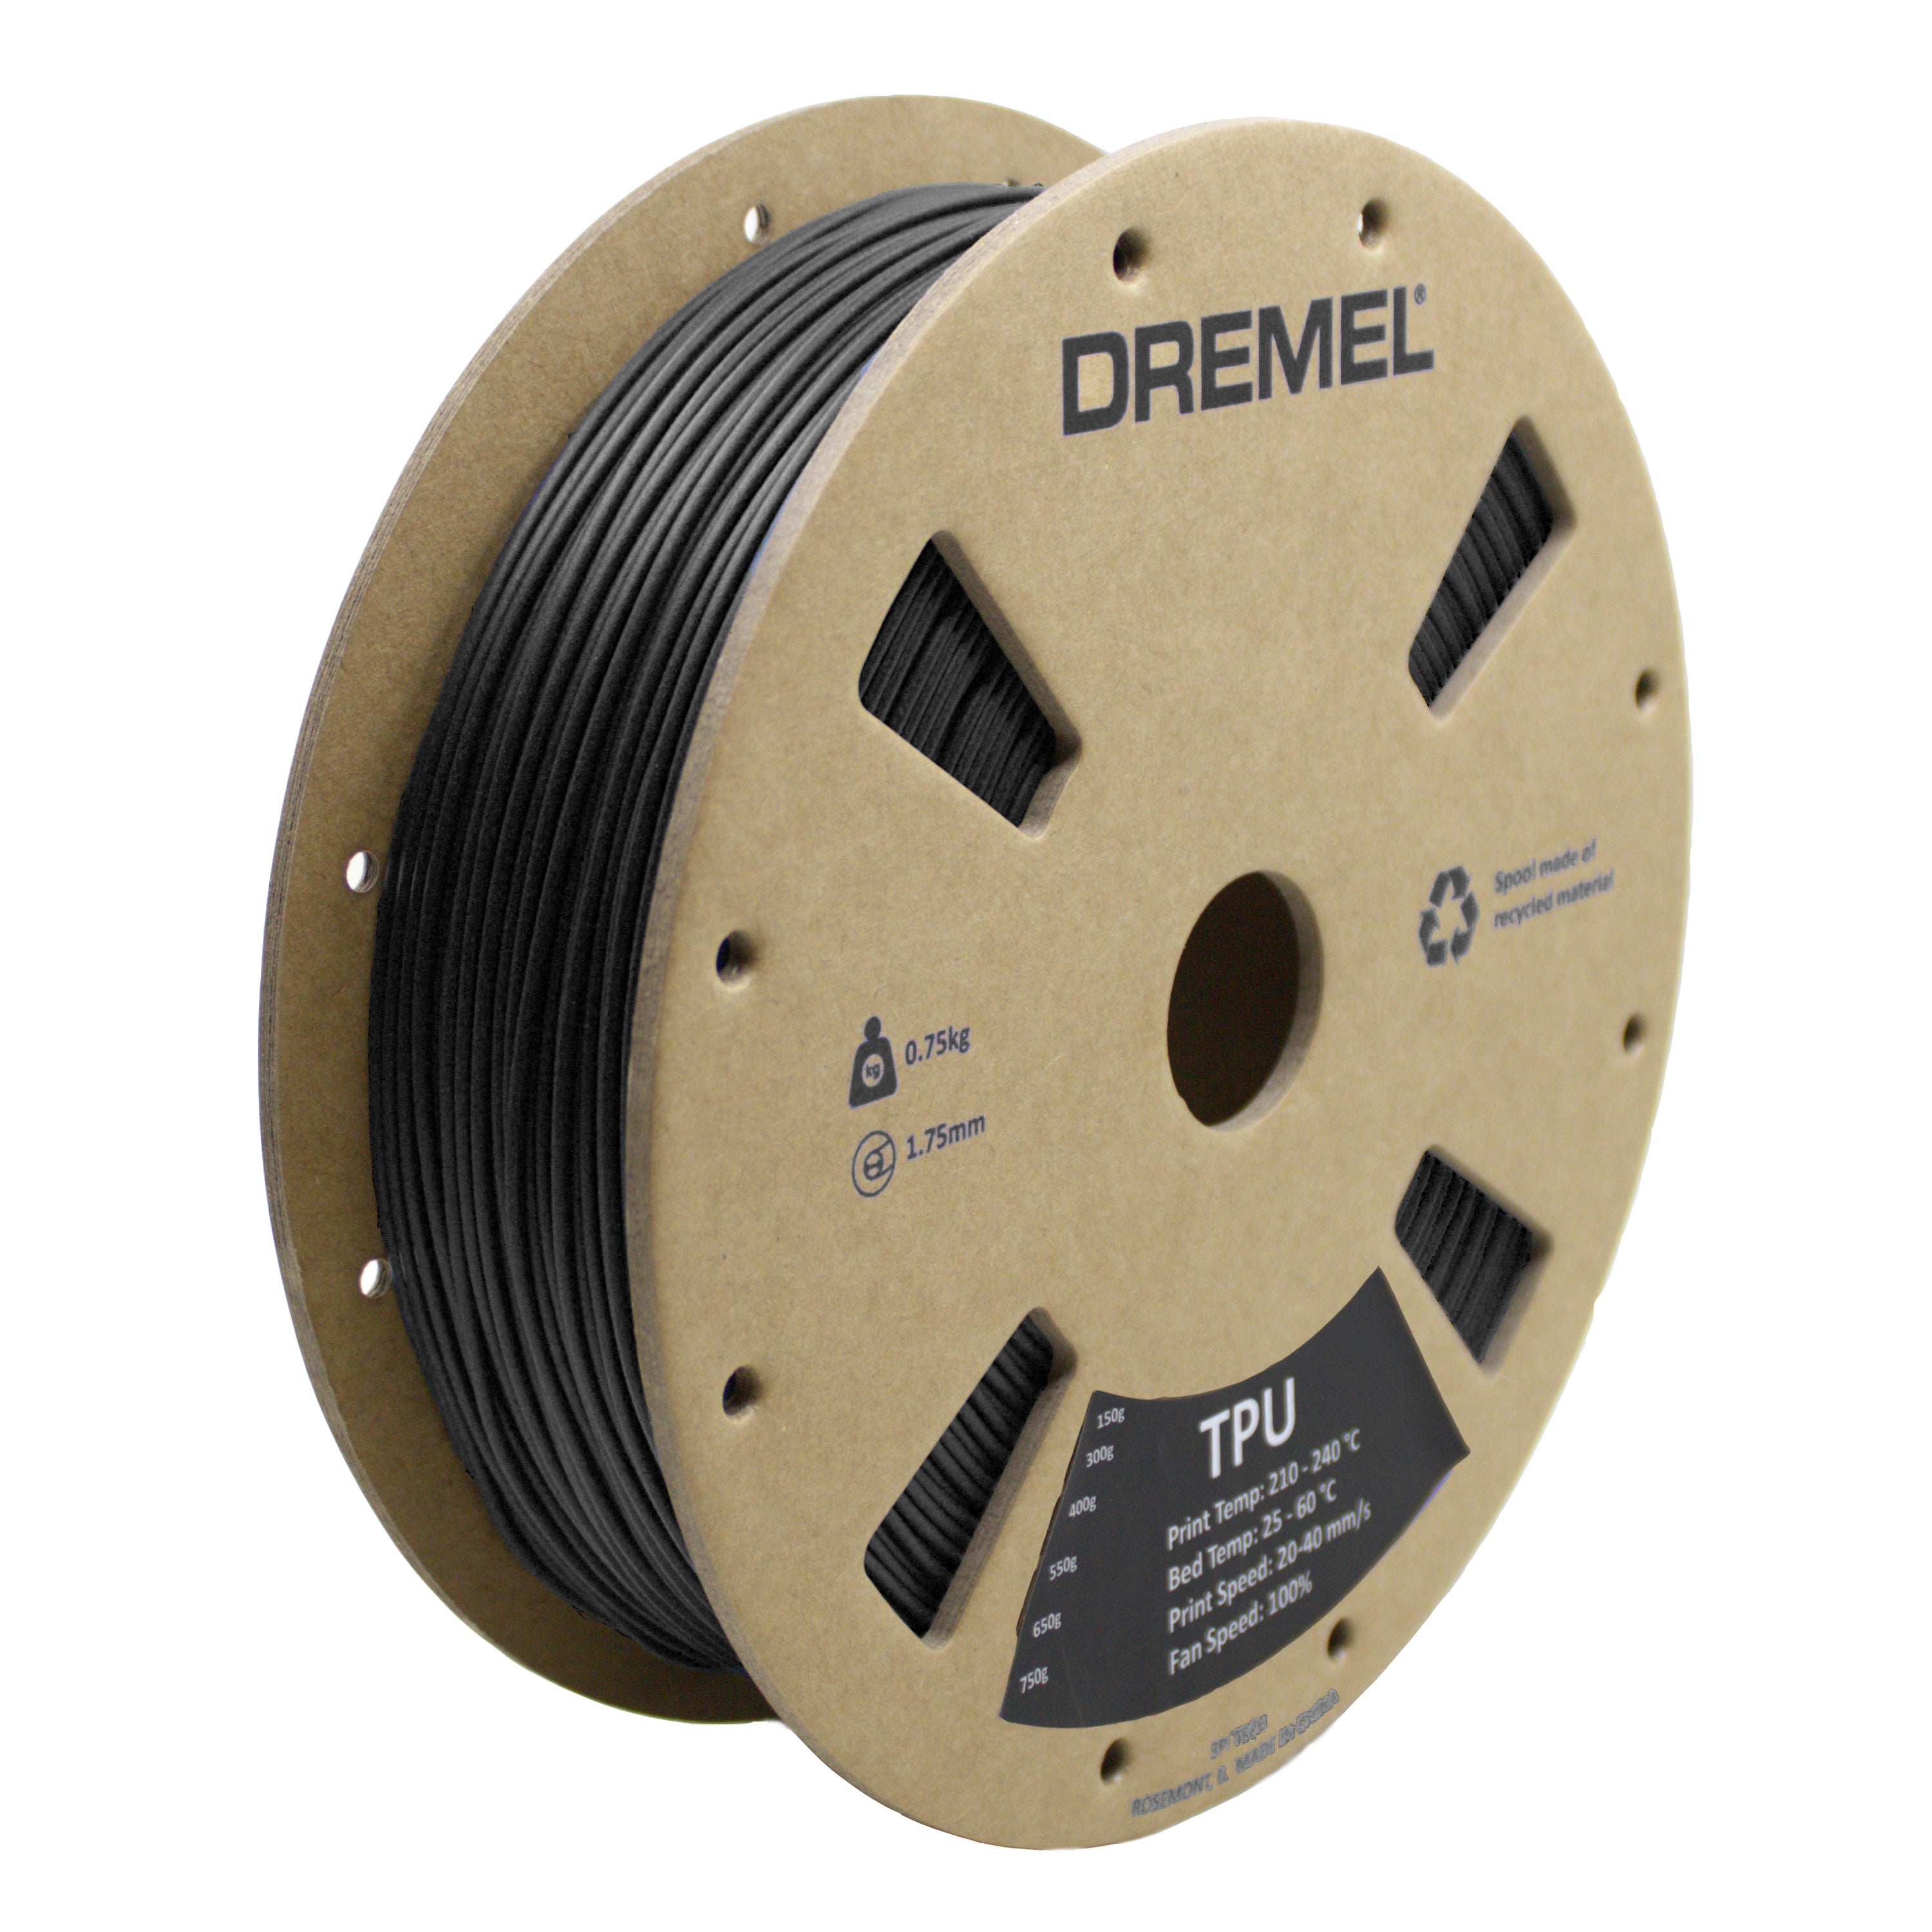 3D TPU Filament Spool, 1.75mm Diameter, Black 0.75kg – 3PI Tech